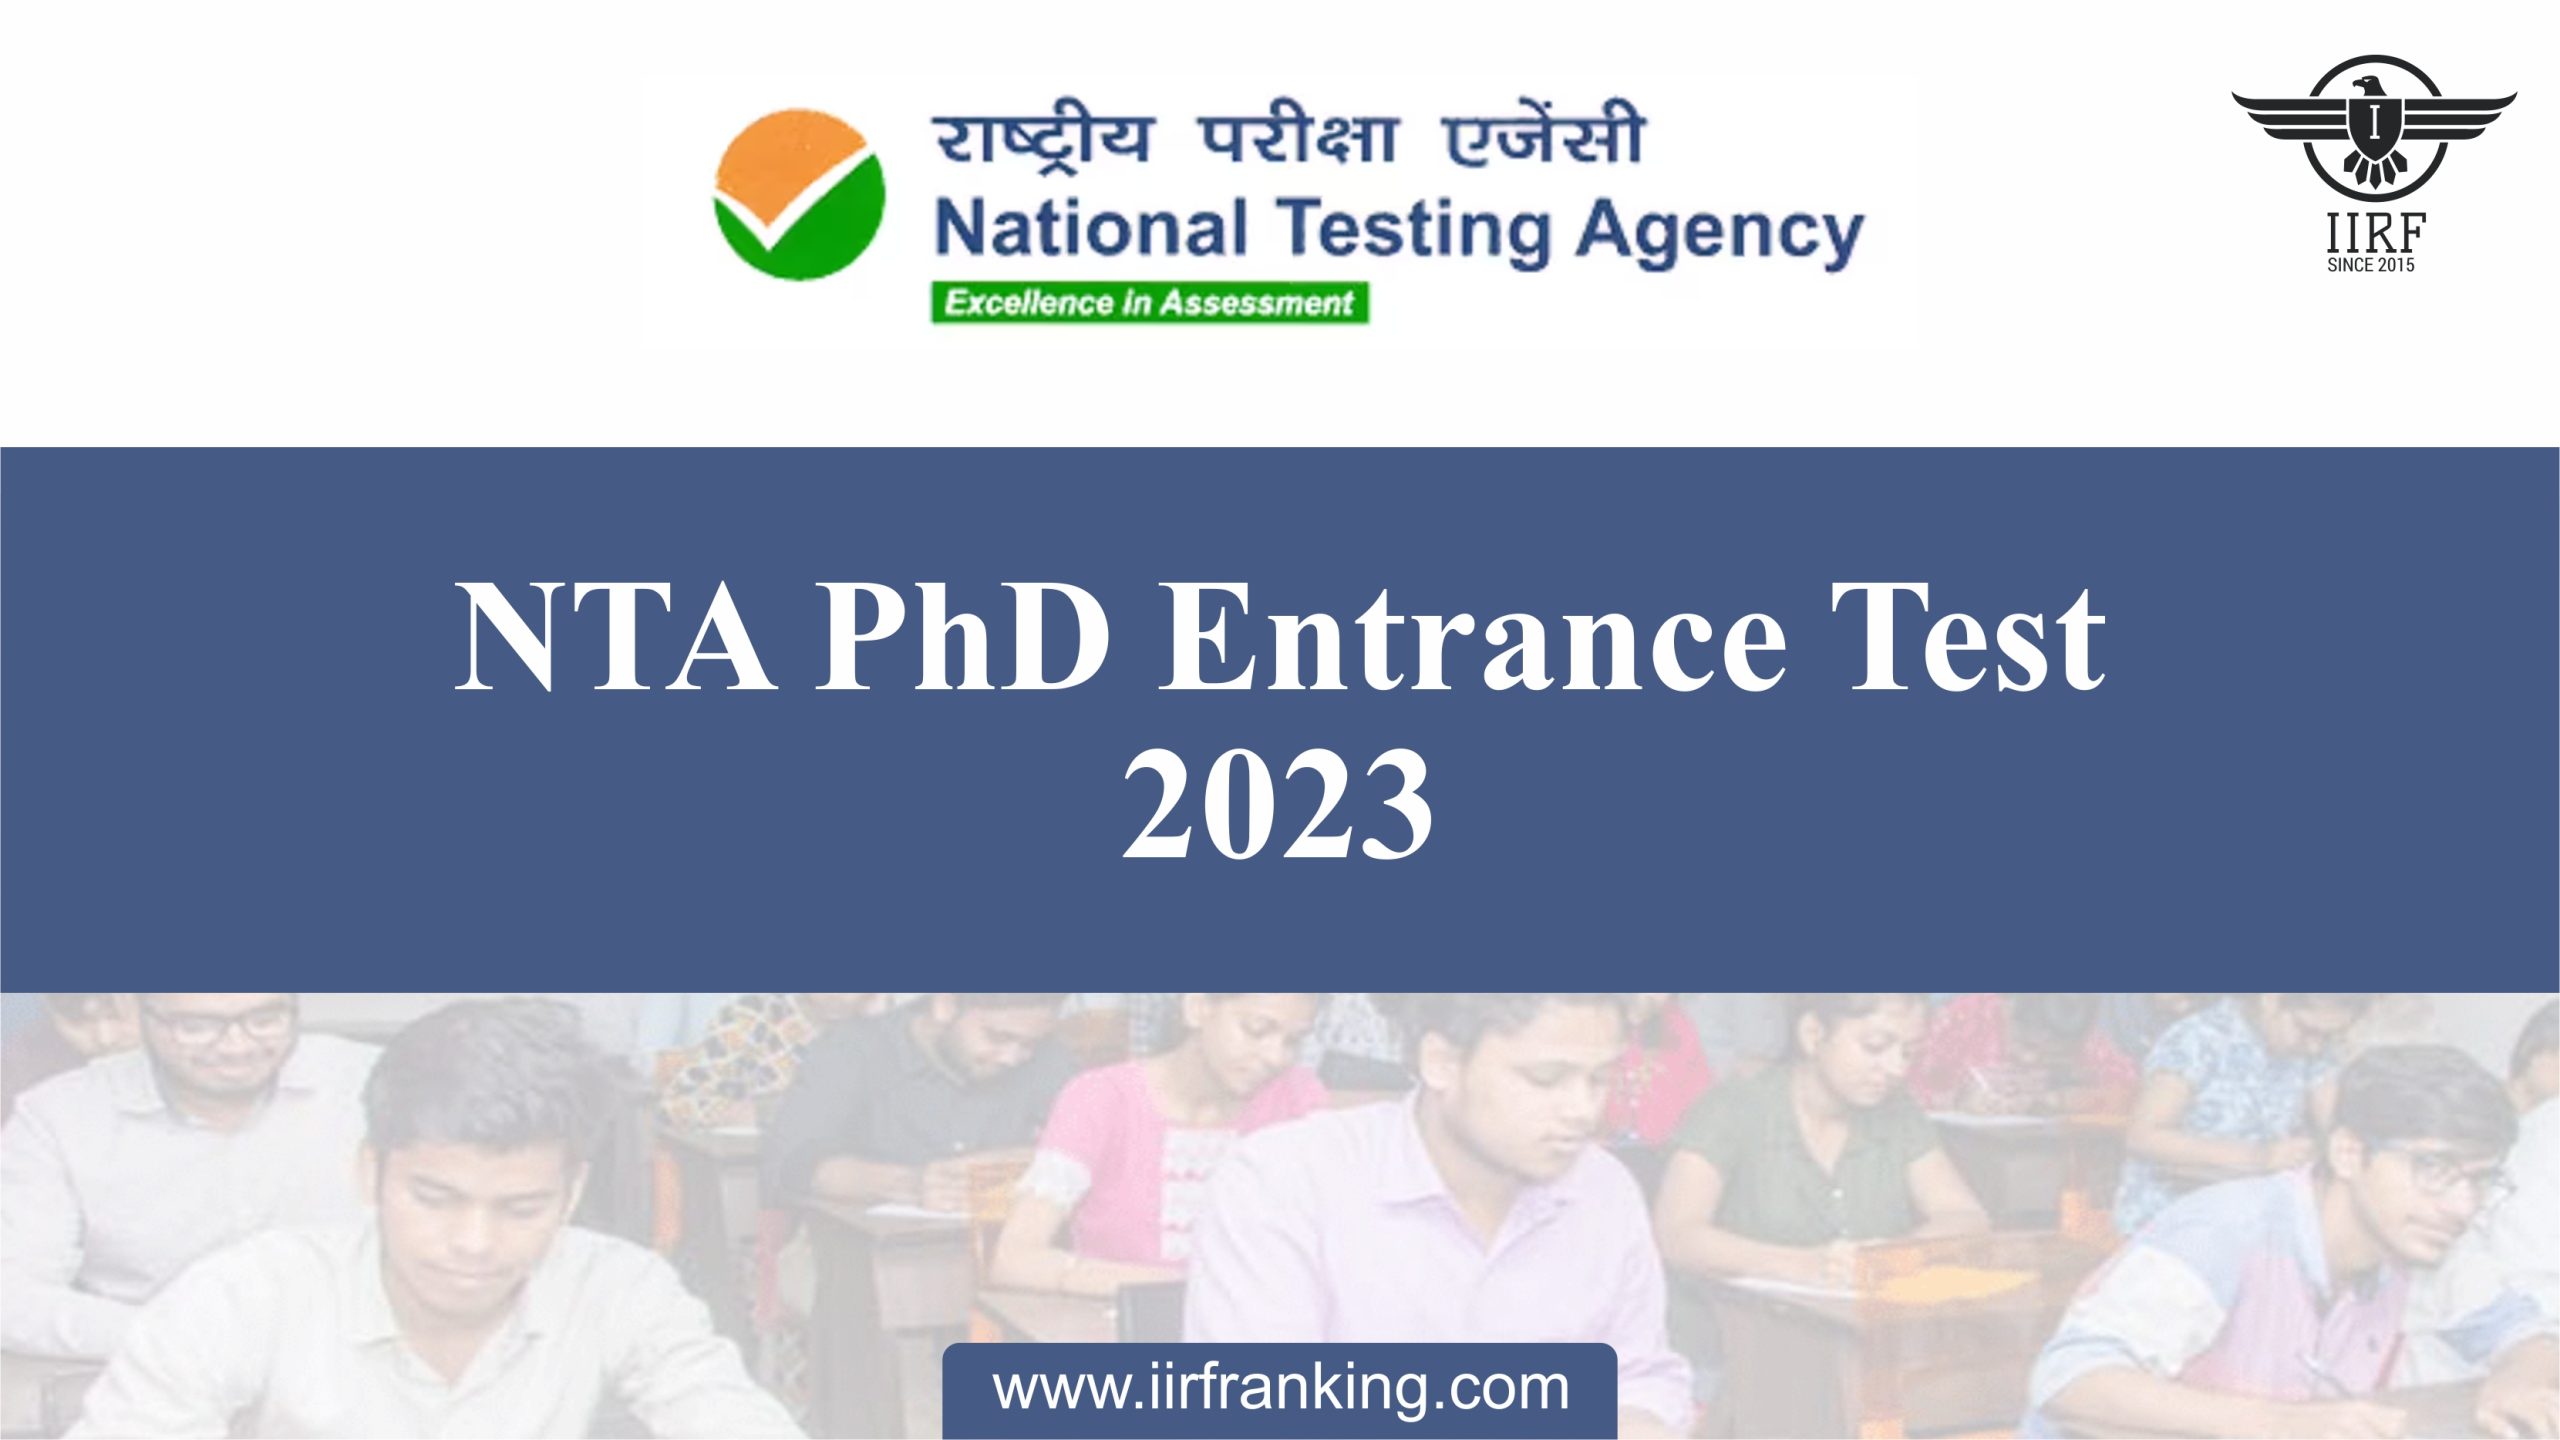 NTA PhD Entrance Test 2023